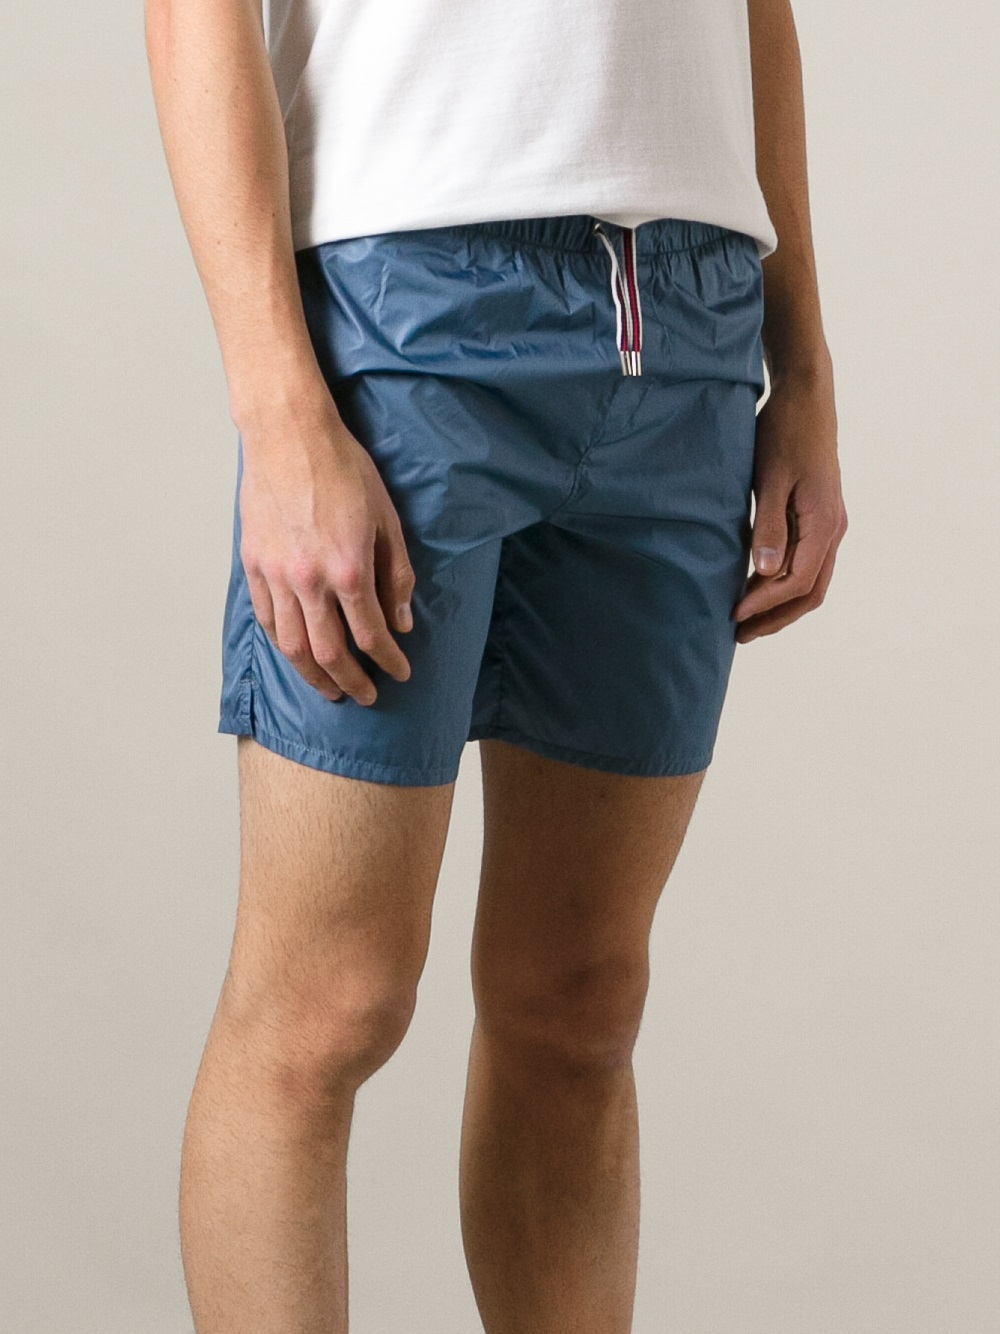 Lyst - Gucci Drawstring Swim Shorts in Blue for Men